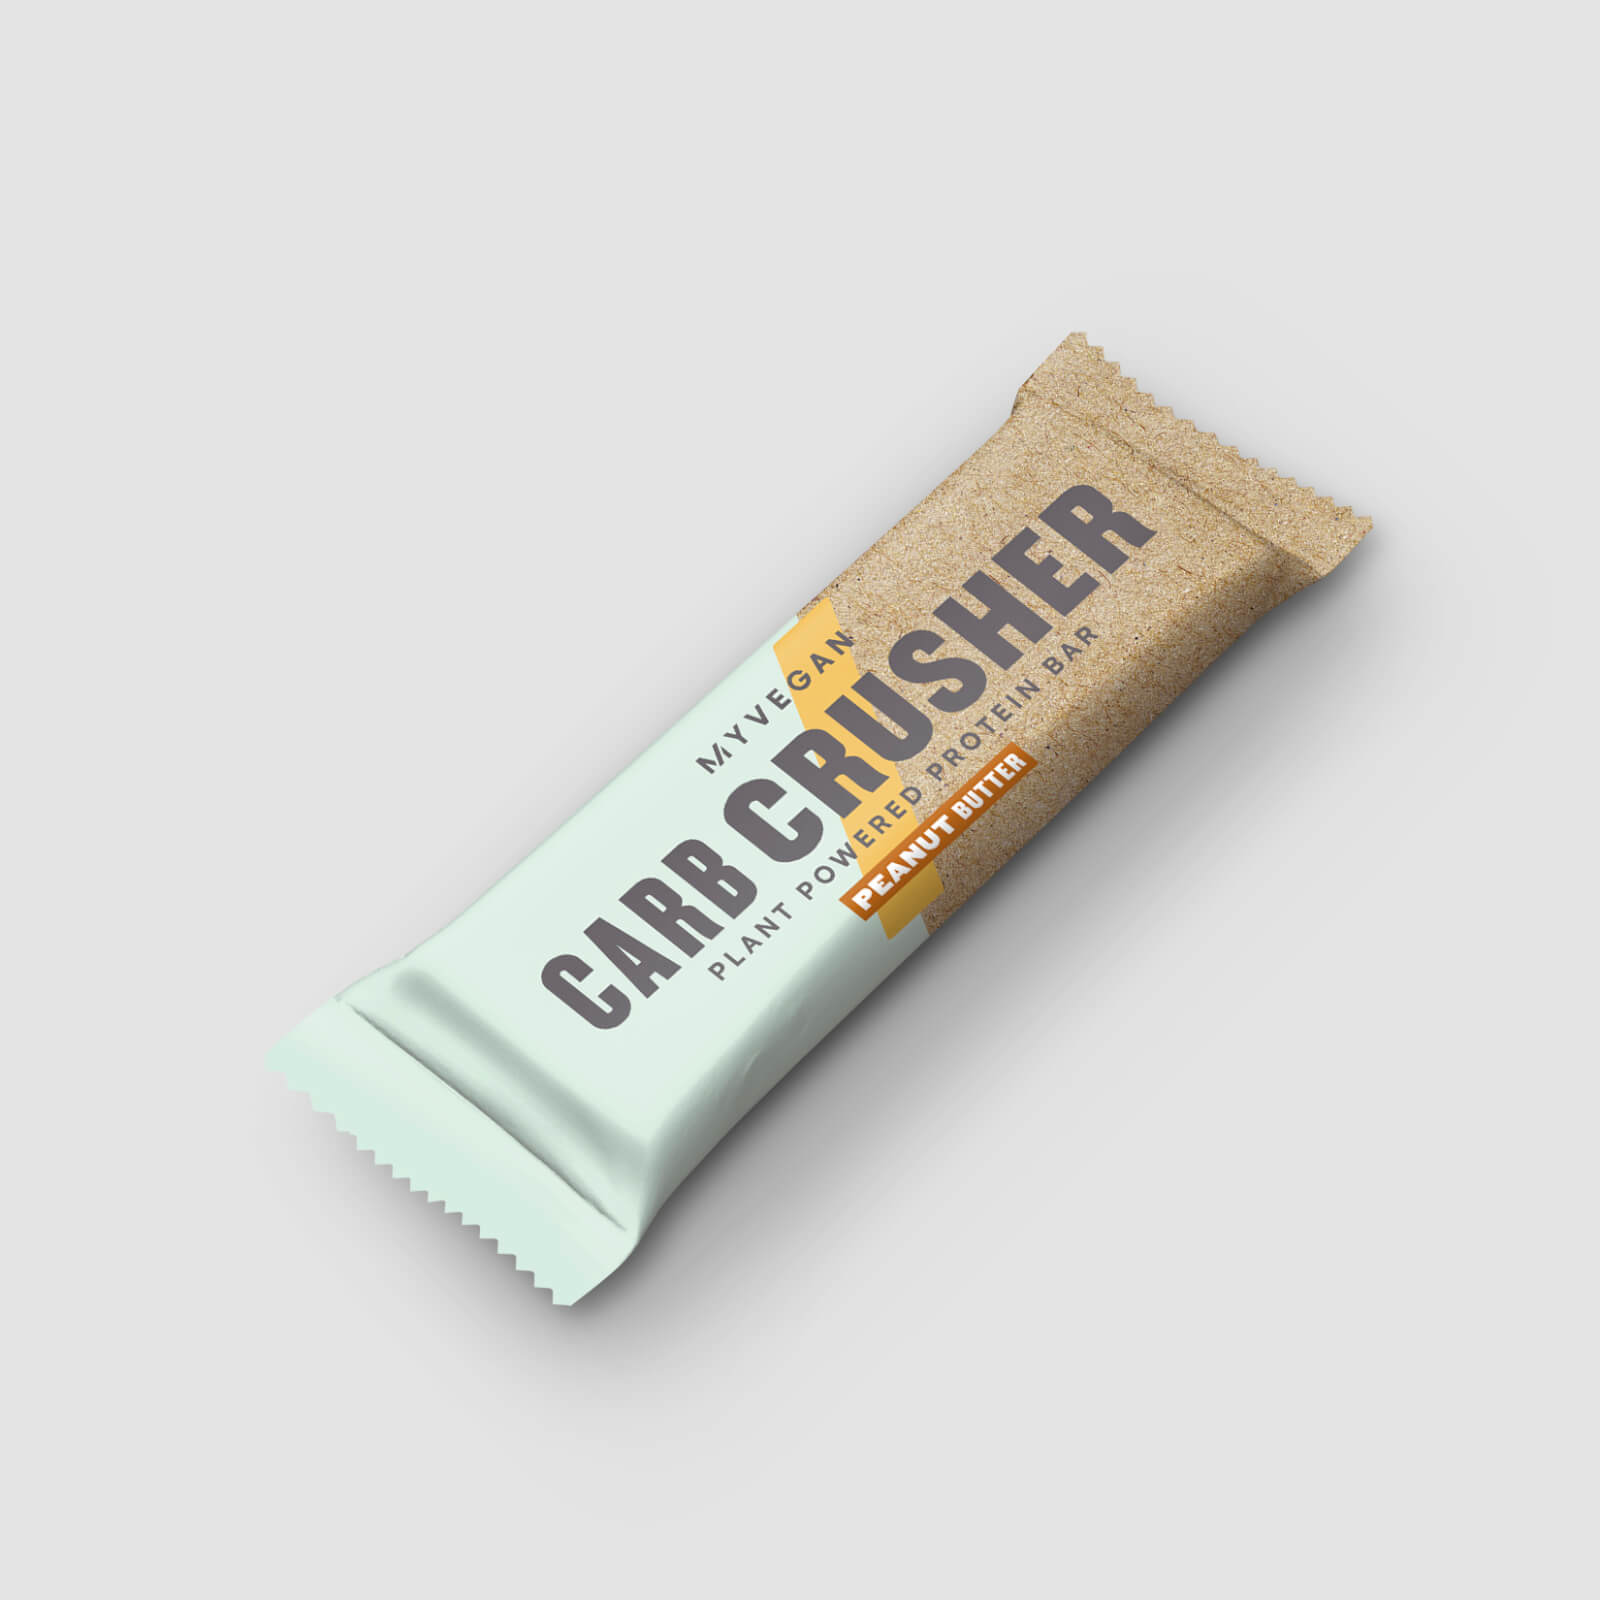 Myprotein Vegan Carb Crusher (Sample) - 60g - New - Chocolate Orange